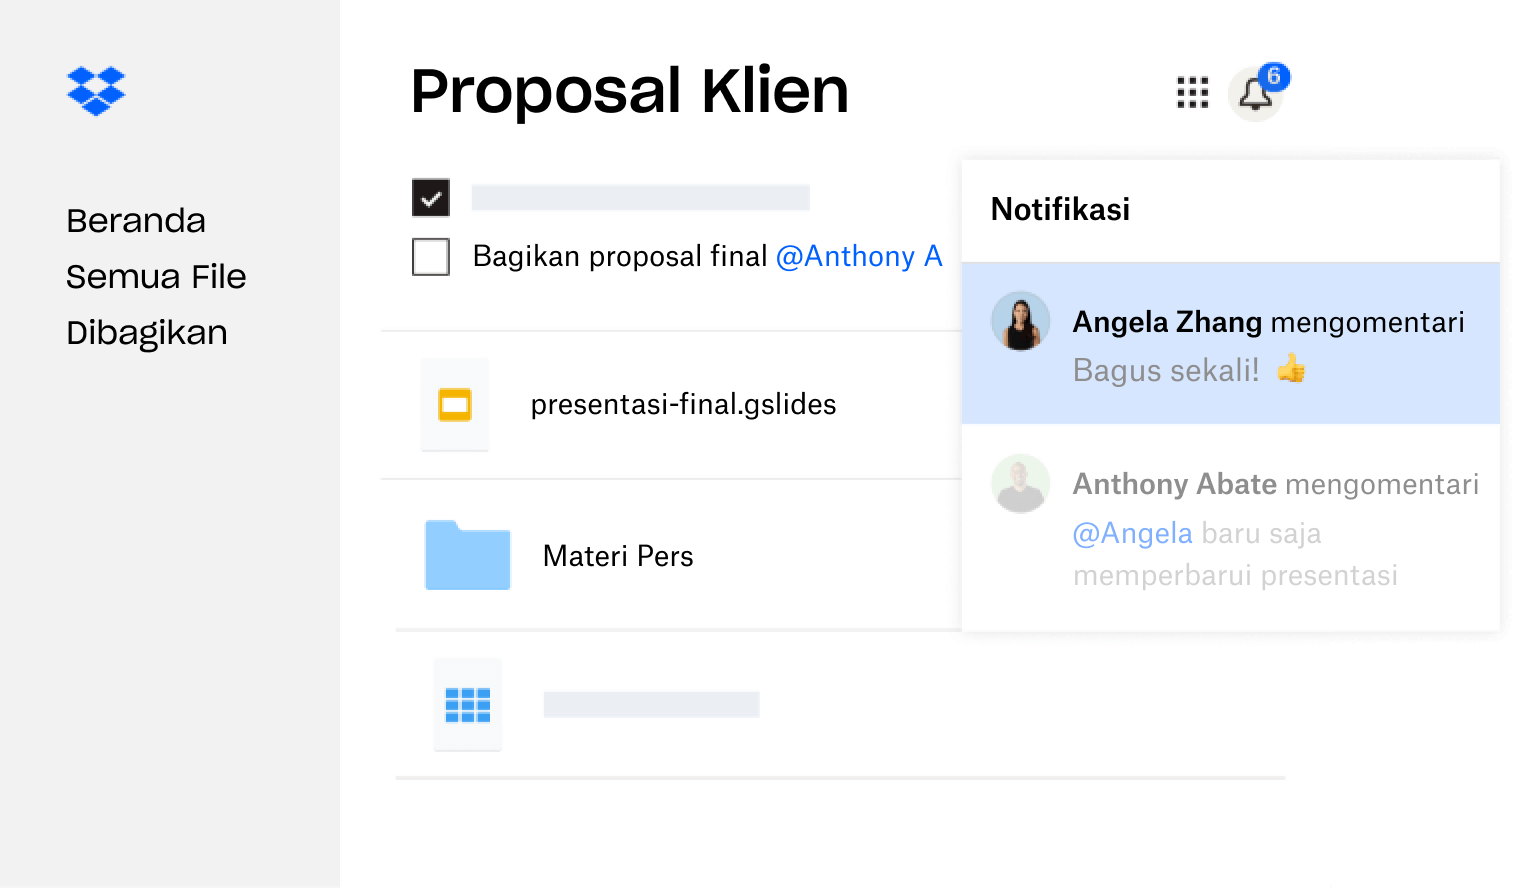 Sebuah proposal klien yang dibuat di Dropbox dibagikan kepada banyak pengguna yang memberikan umpan balik.